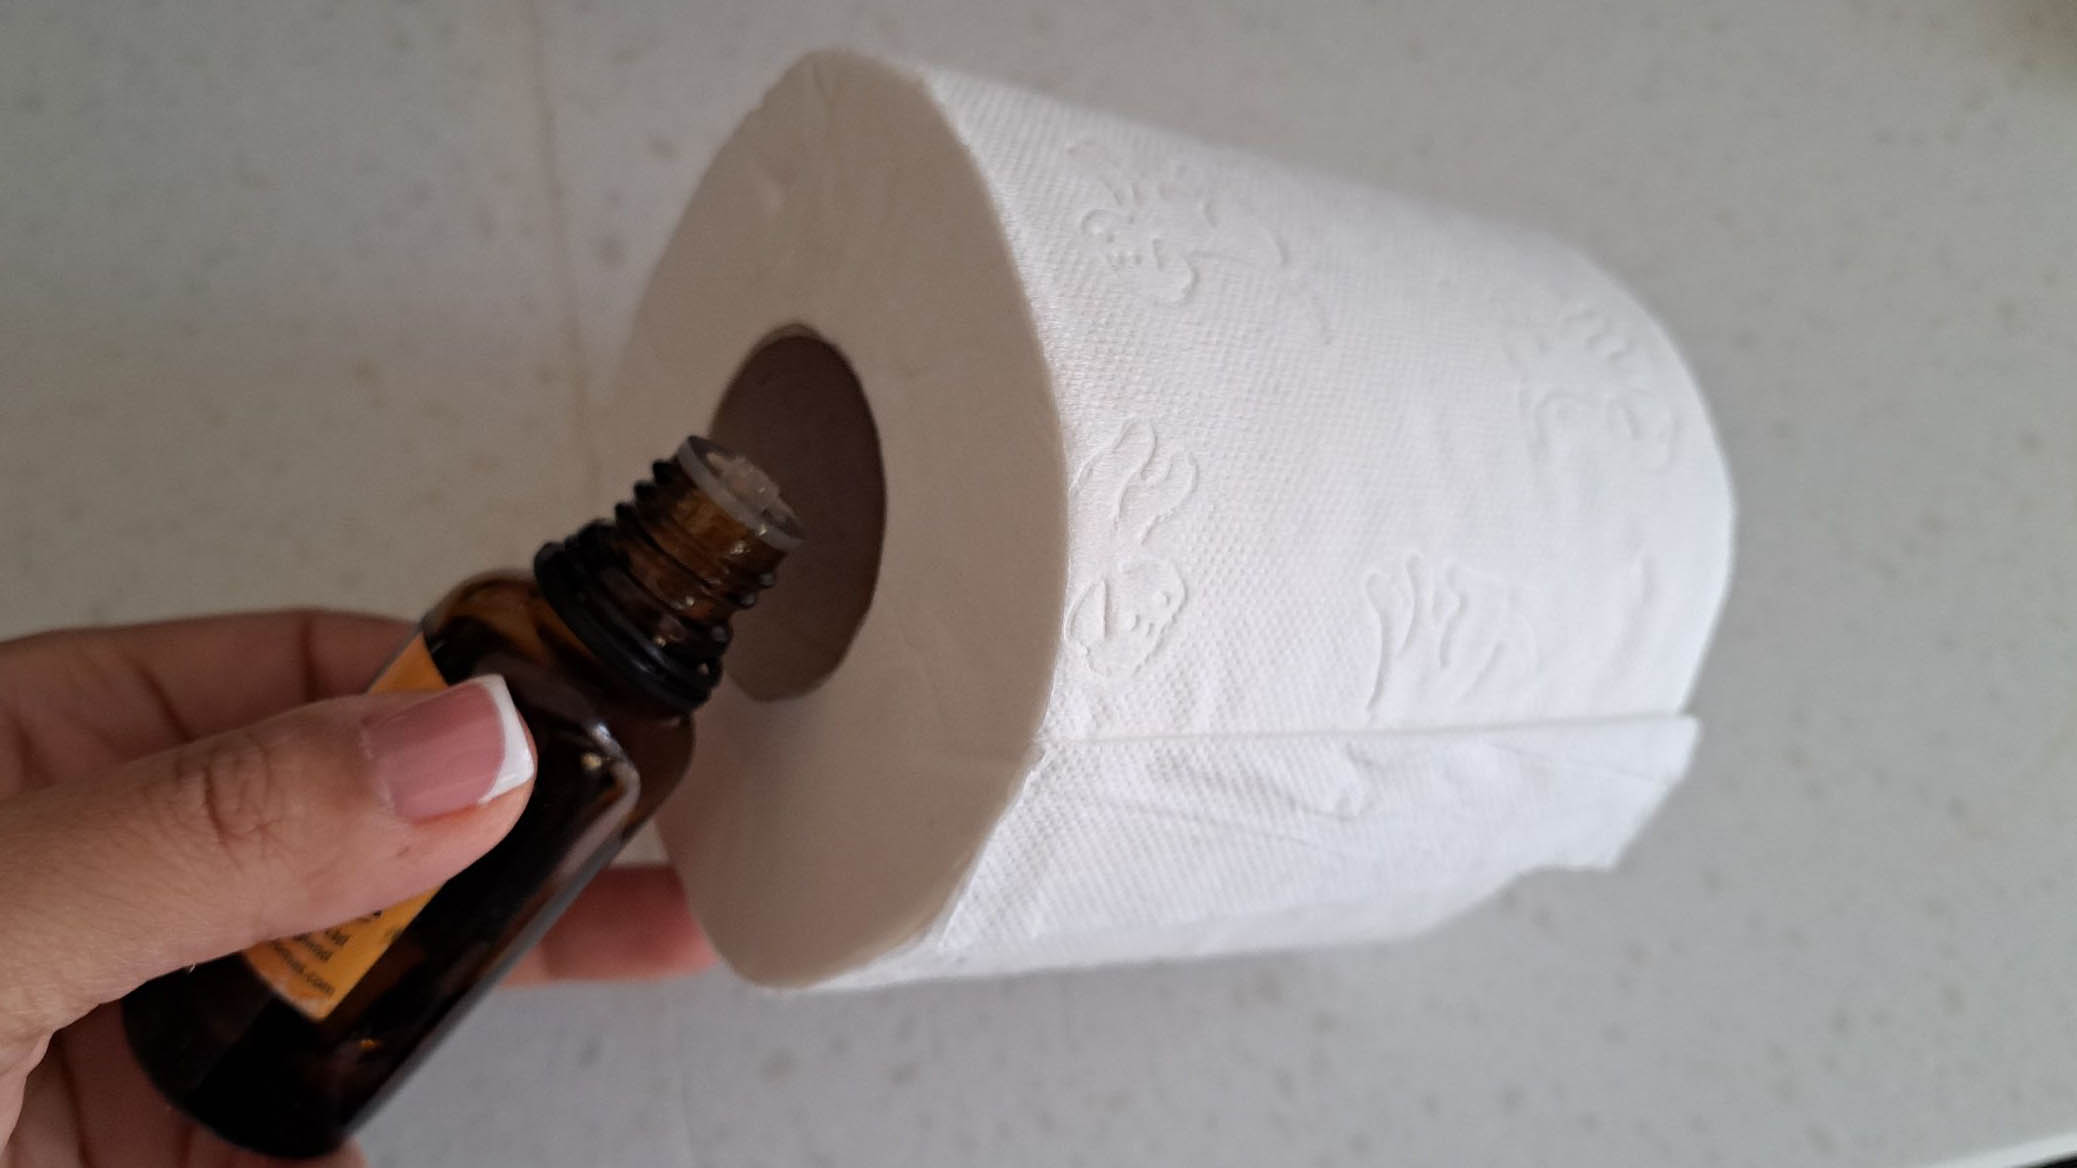 Essential oil drops inside toilet roll